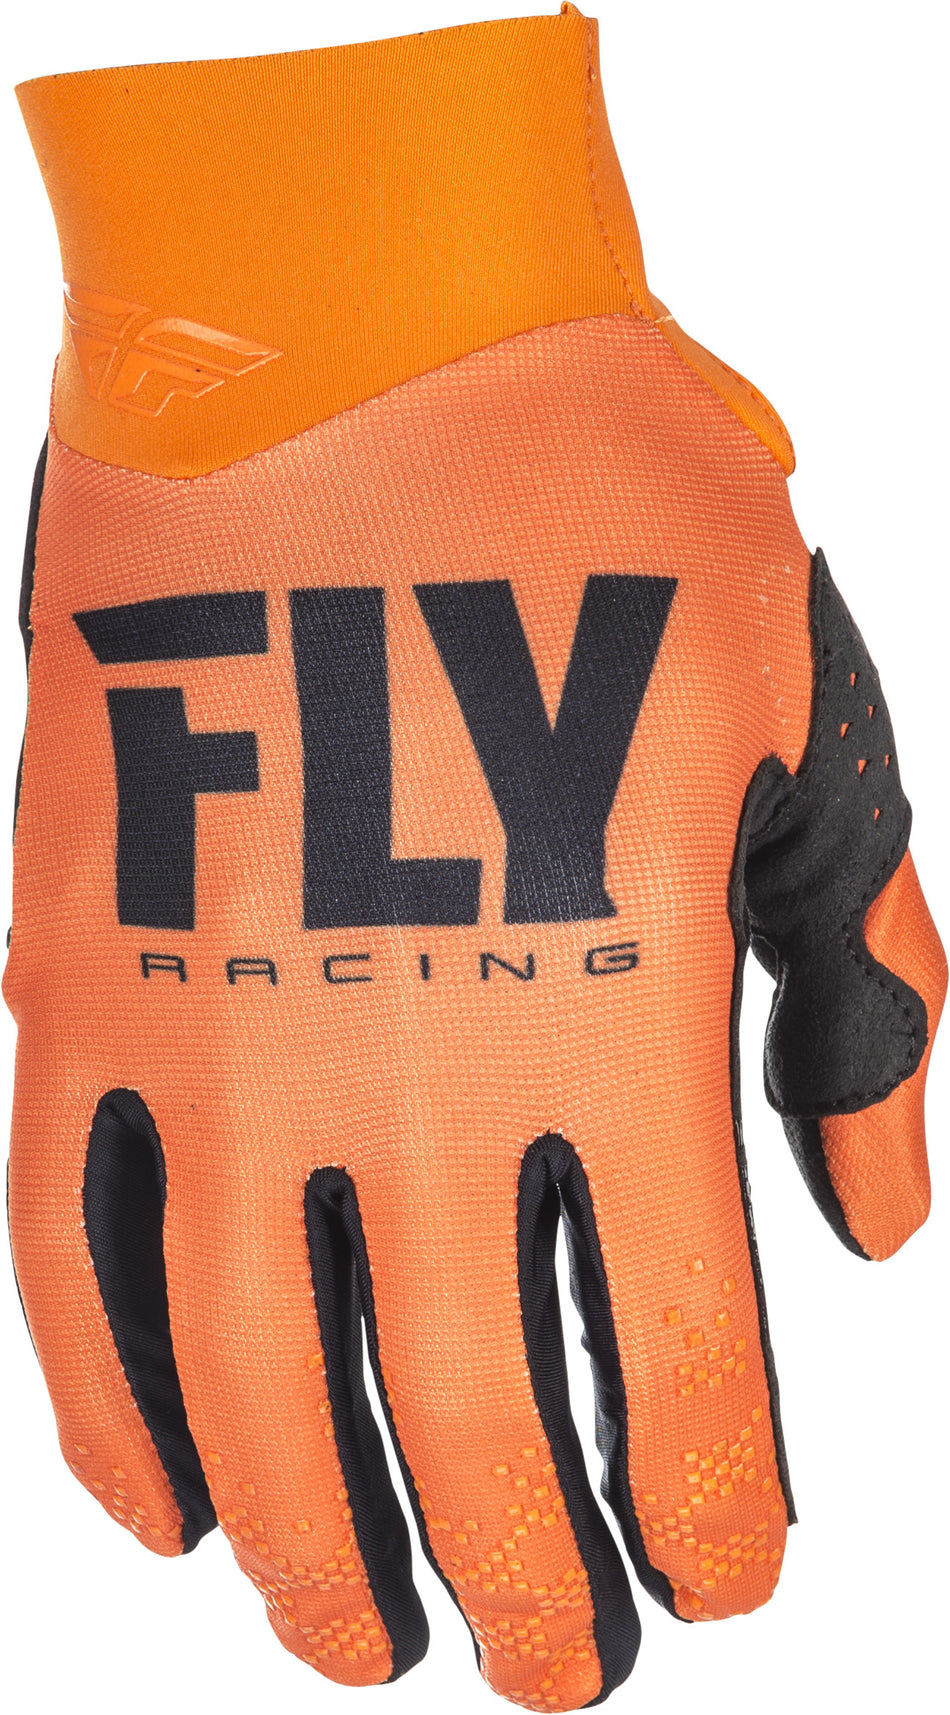 FLY RACING Pro Lite Gloves Orange Sz 7 371-81807